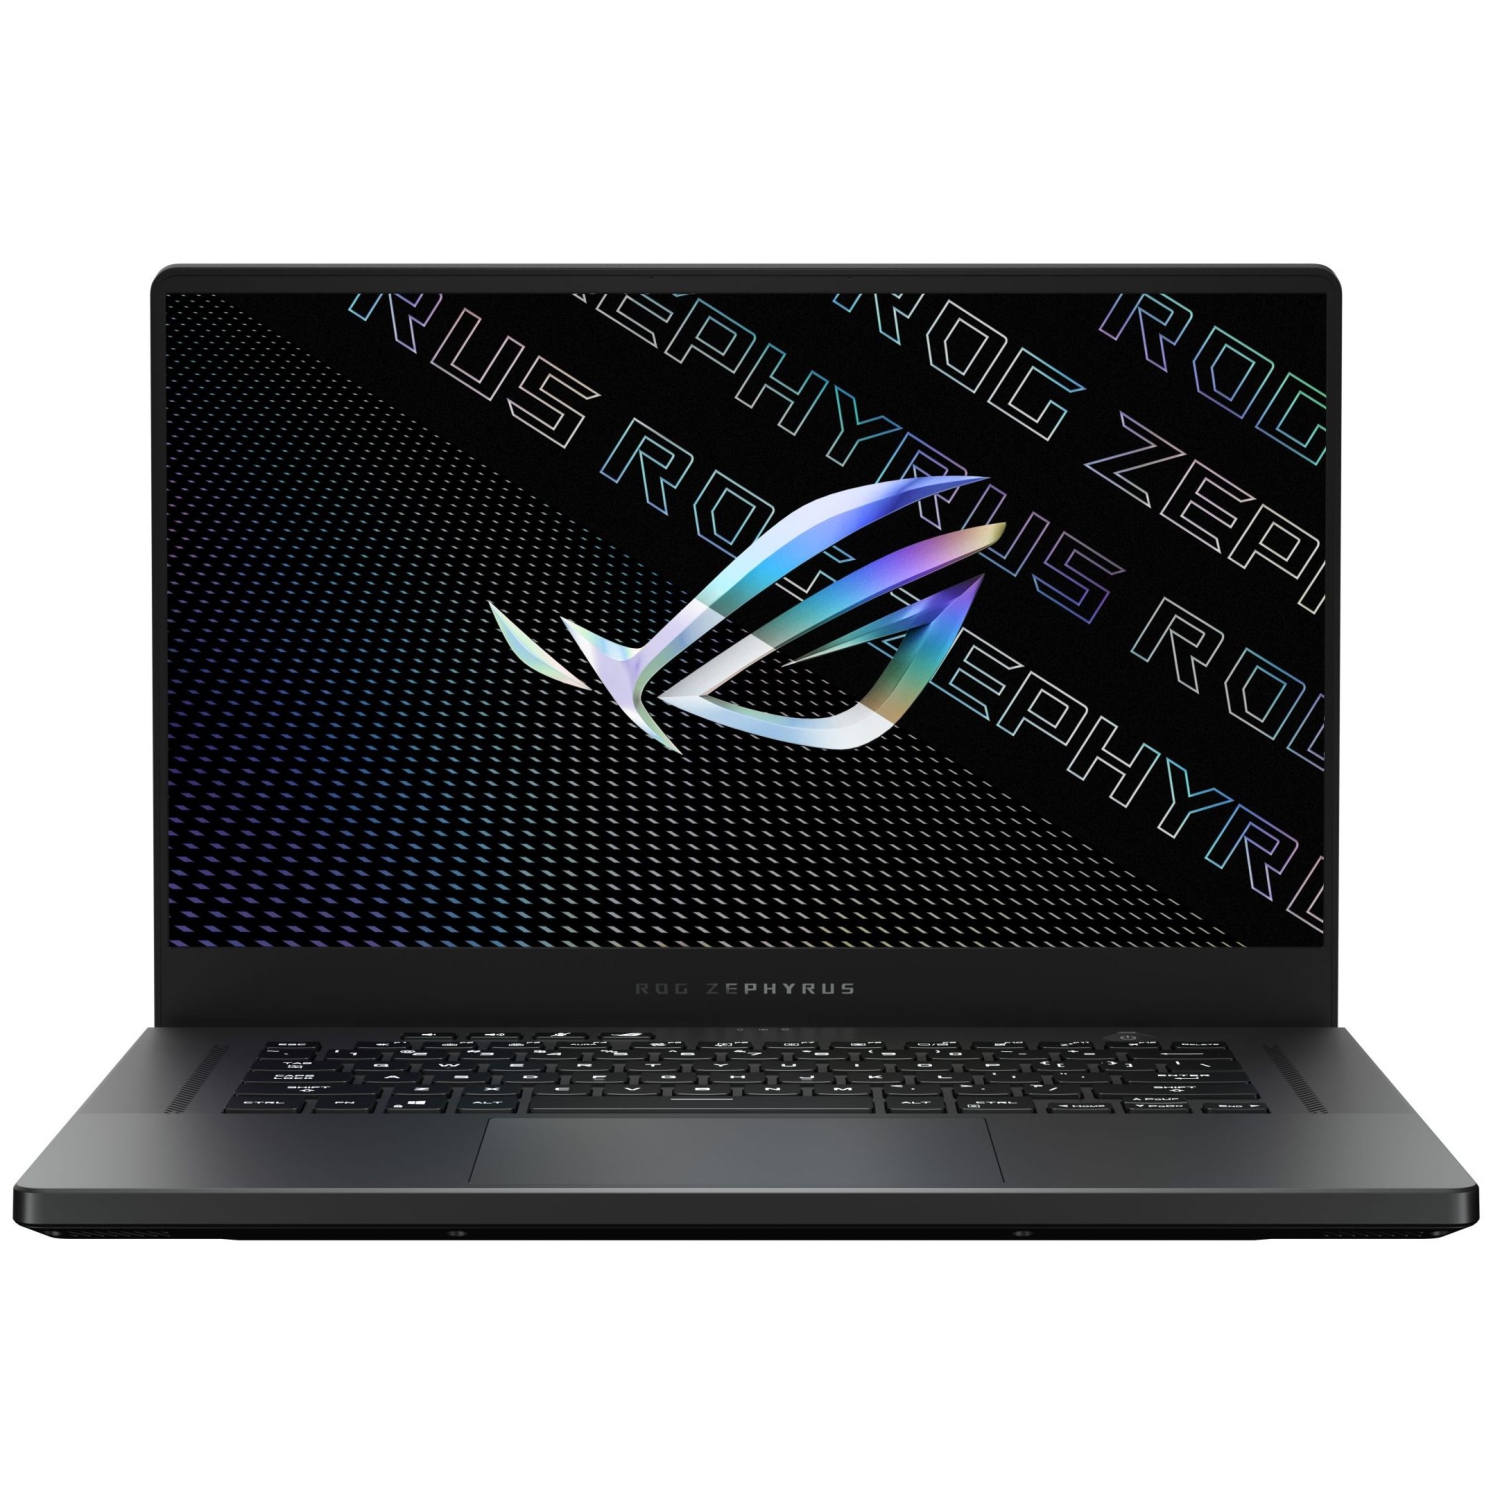 Custom ASUS ROG Zephyrus G15 Laptop (AMD Ryzen 9 5900HS, 40GB RAM, 2TB m.2 SATA SSD, NVIDIA RTX 3070, Win 10 Pro)